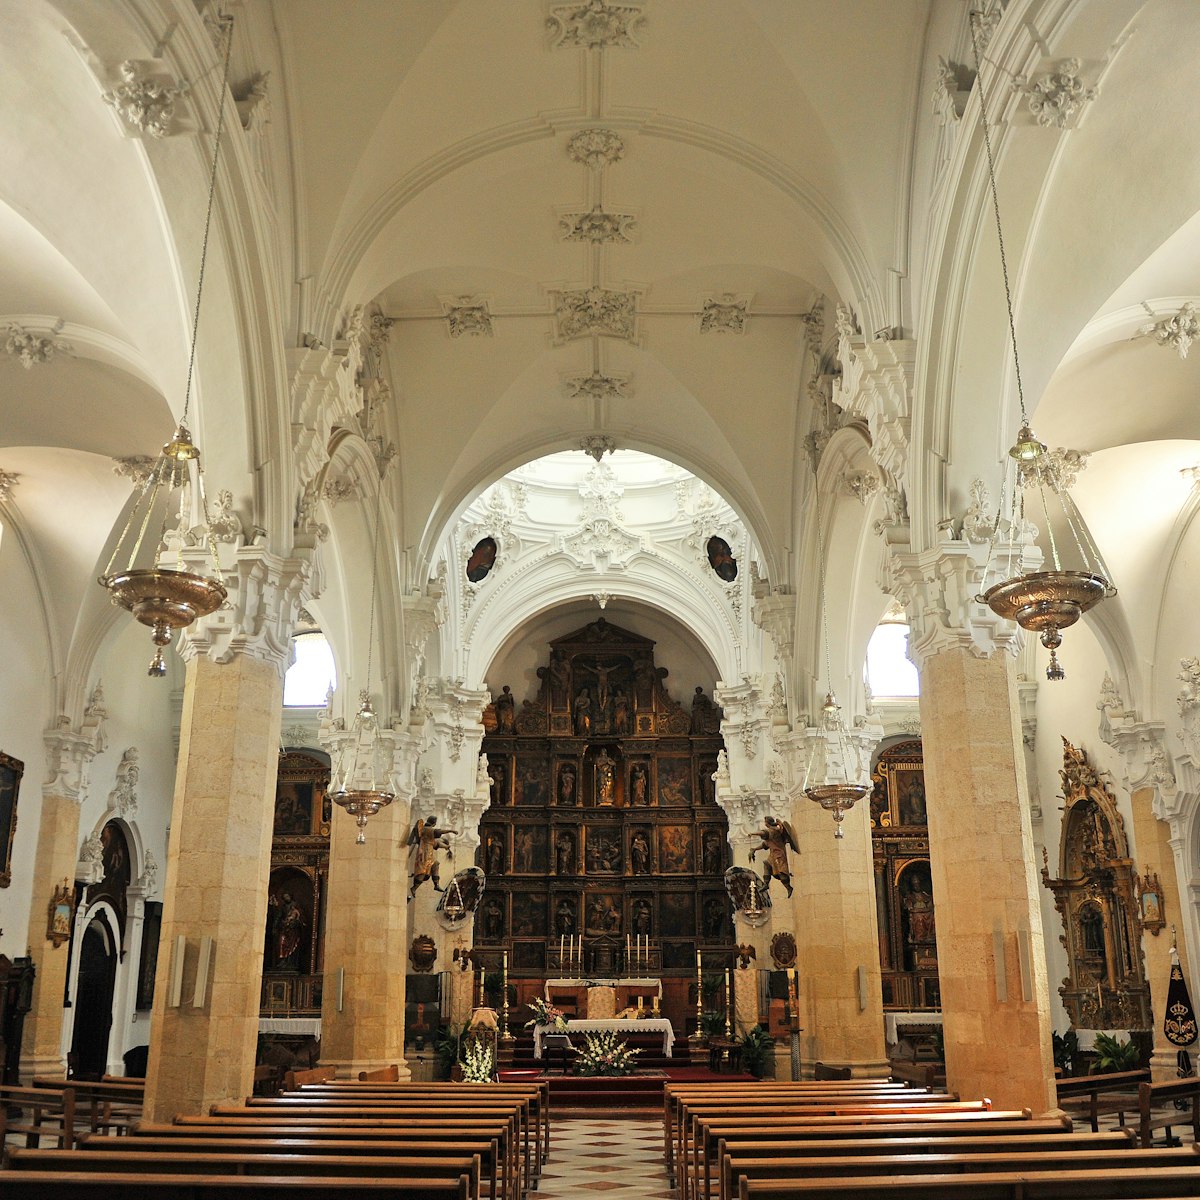 Inside the Assumption church (Iglesia de la Asuncion) in Priego de Cordoba.